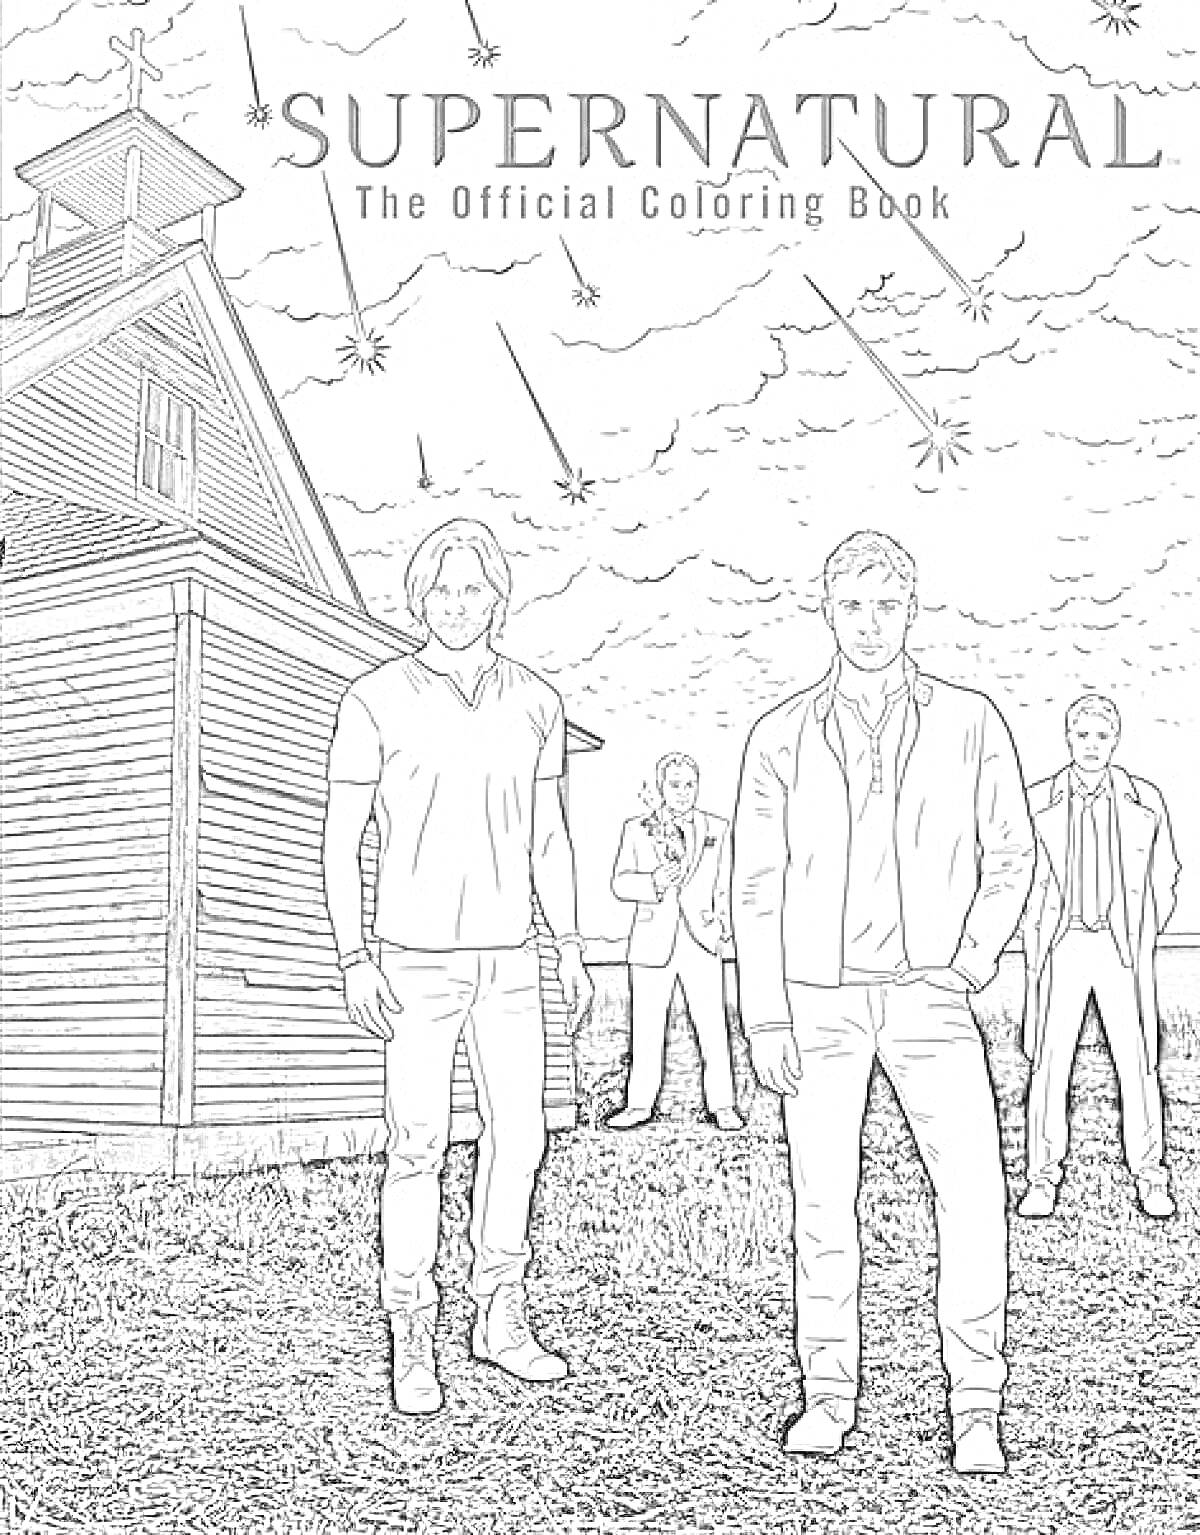 Раскраска Supernatural: The Official Coloring Book - церковь, четыре мужчины, звезды на небе